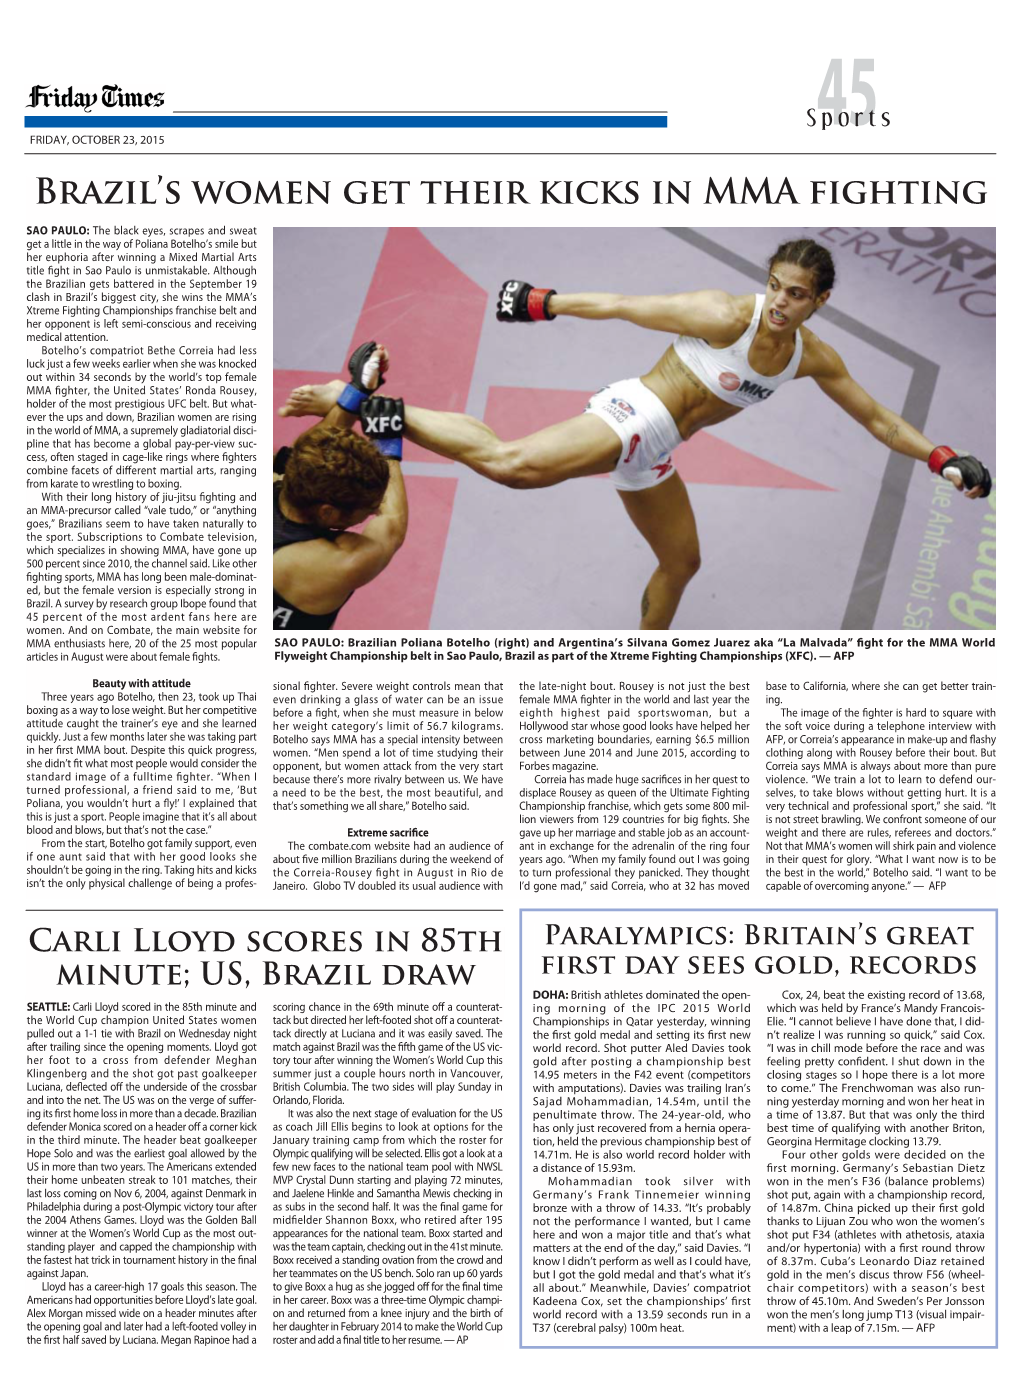 Brazil's Women Get Their Kicks in MMA Fighting